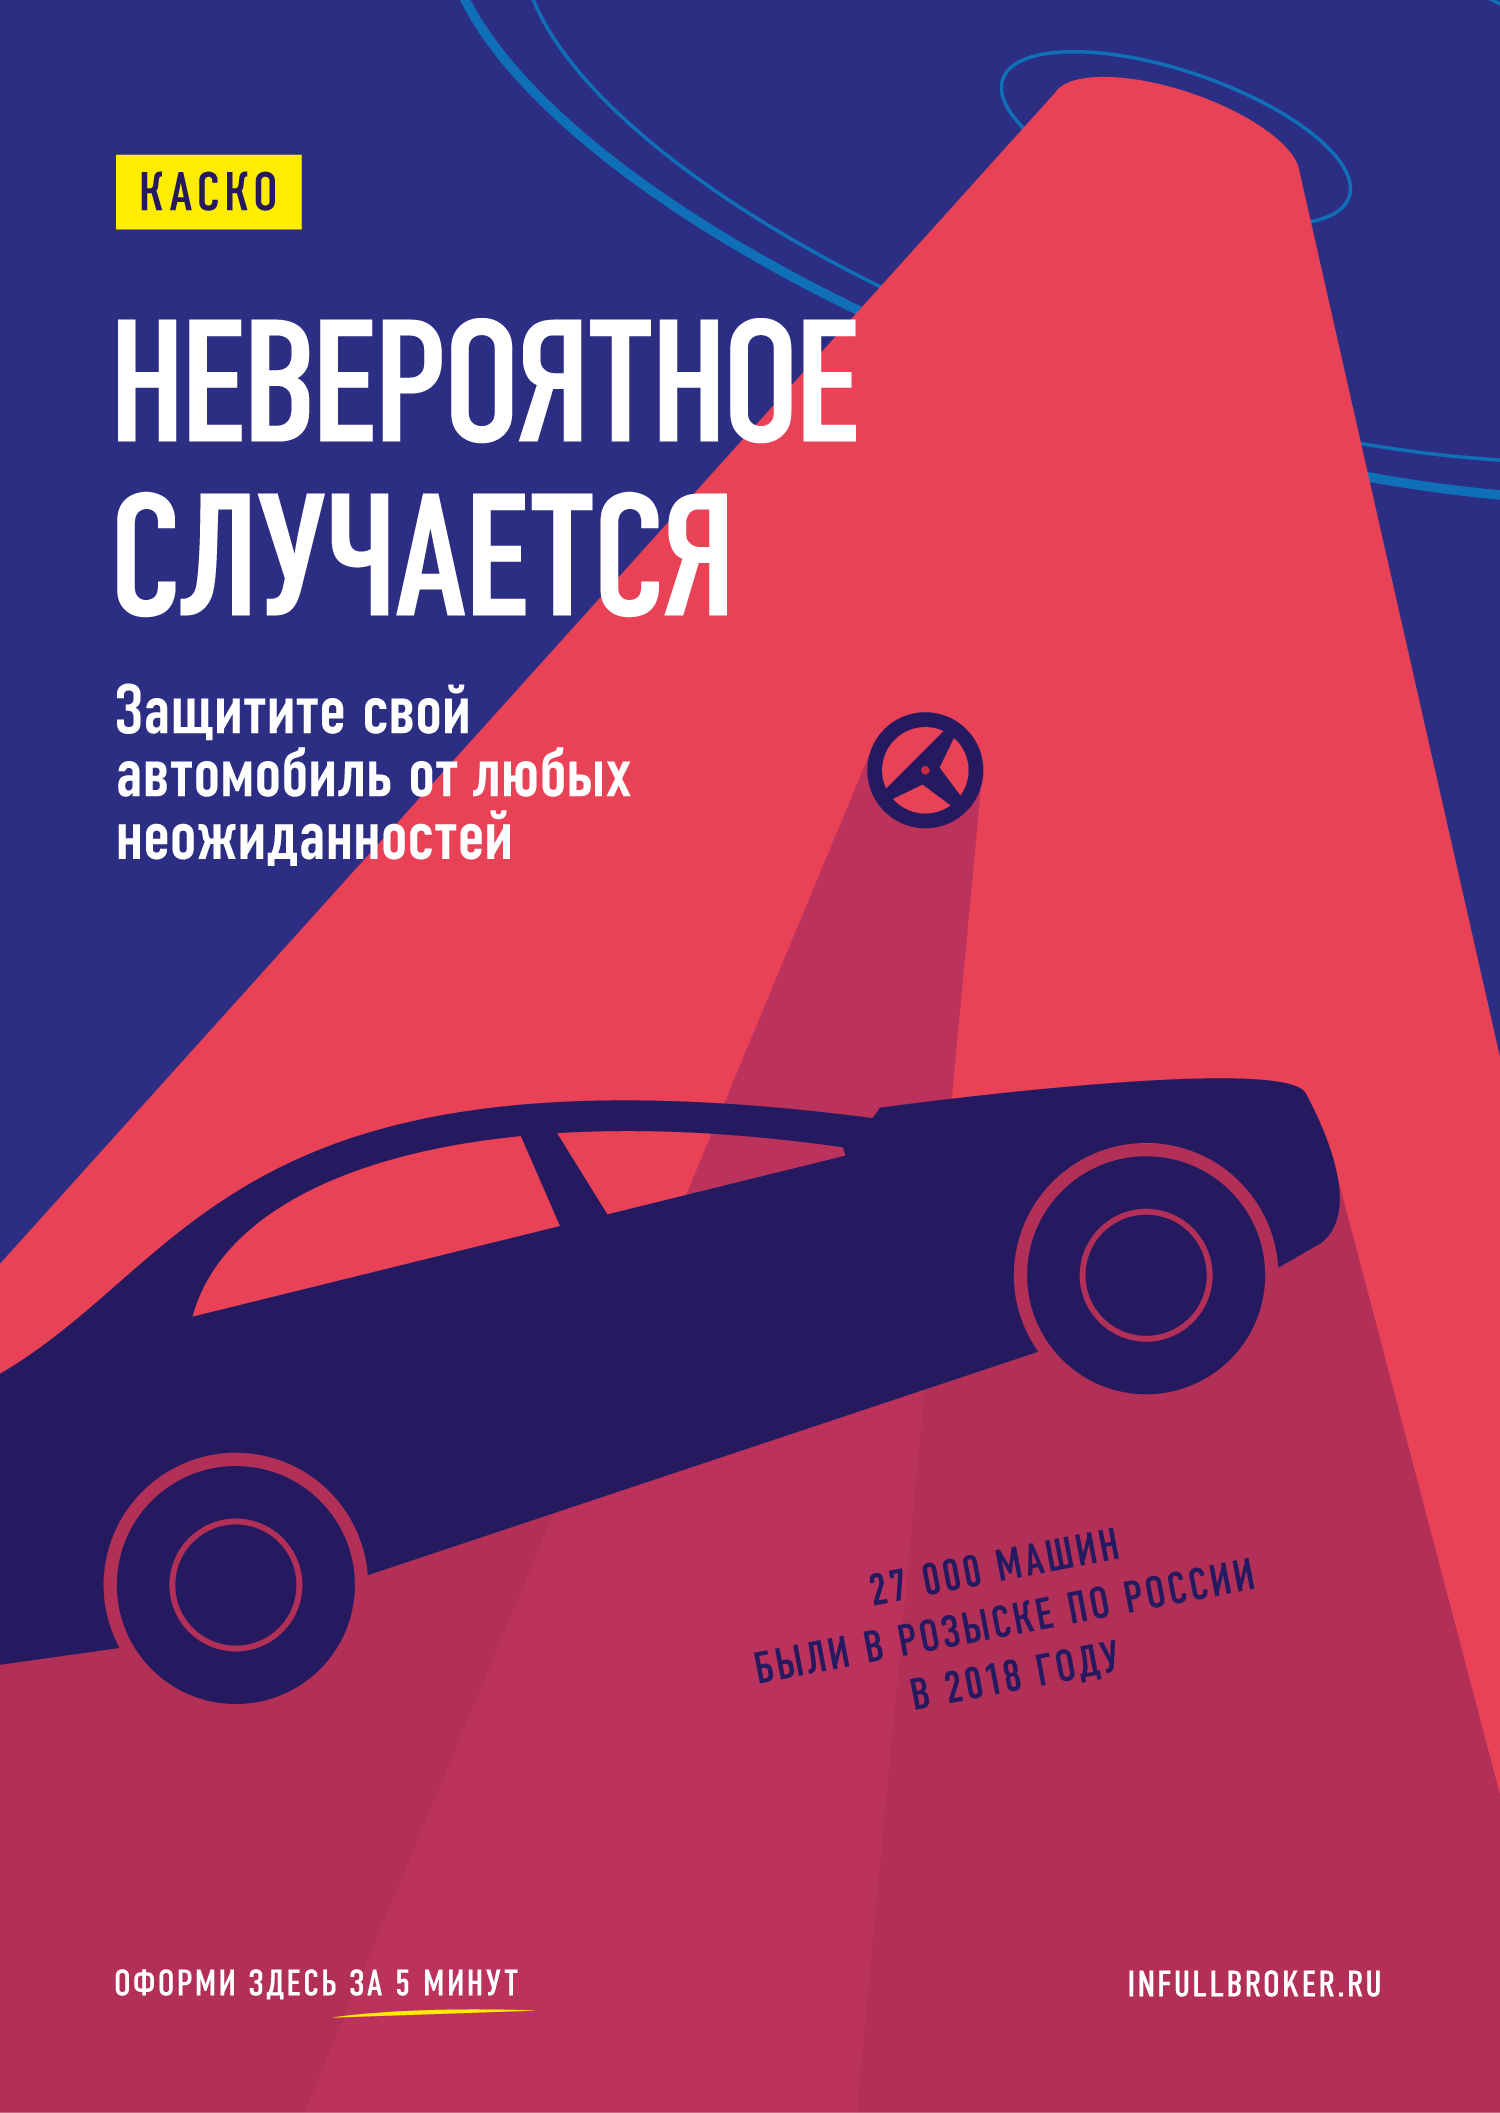 Постер КАСКО